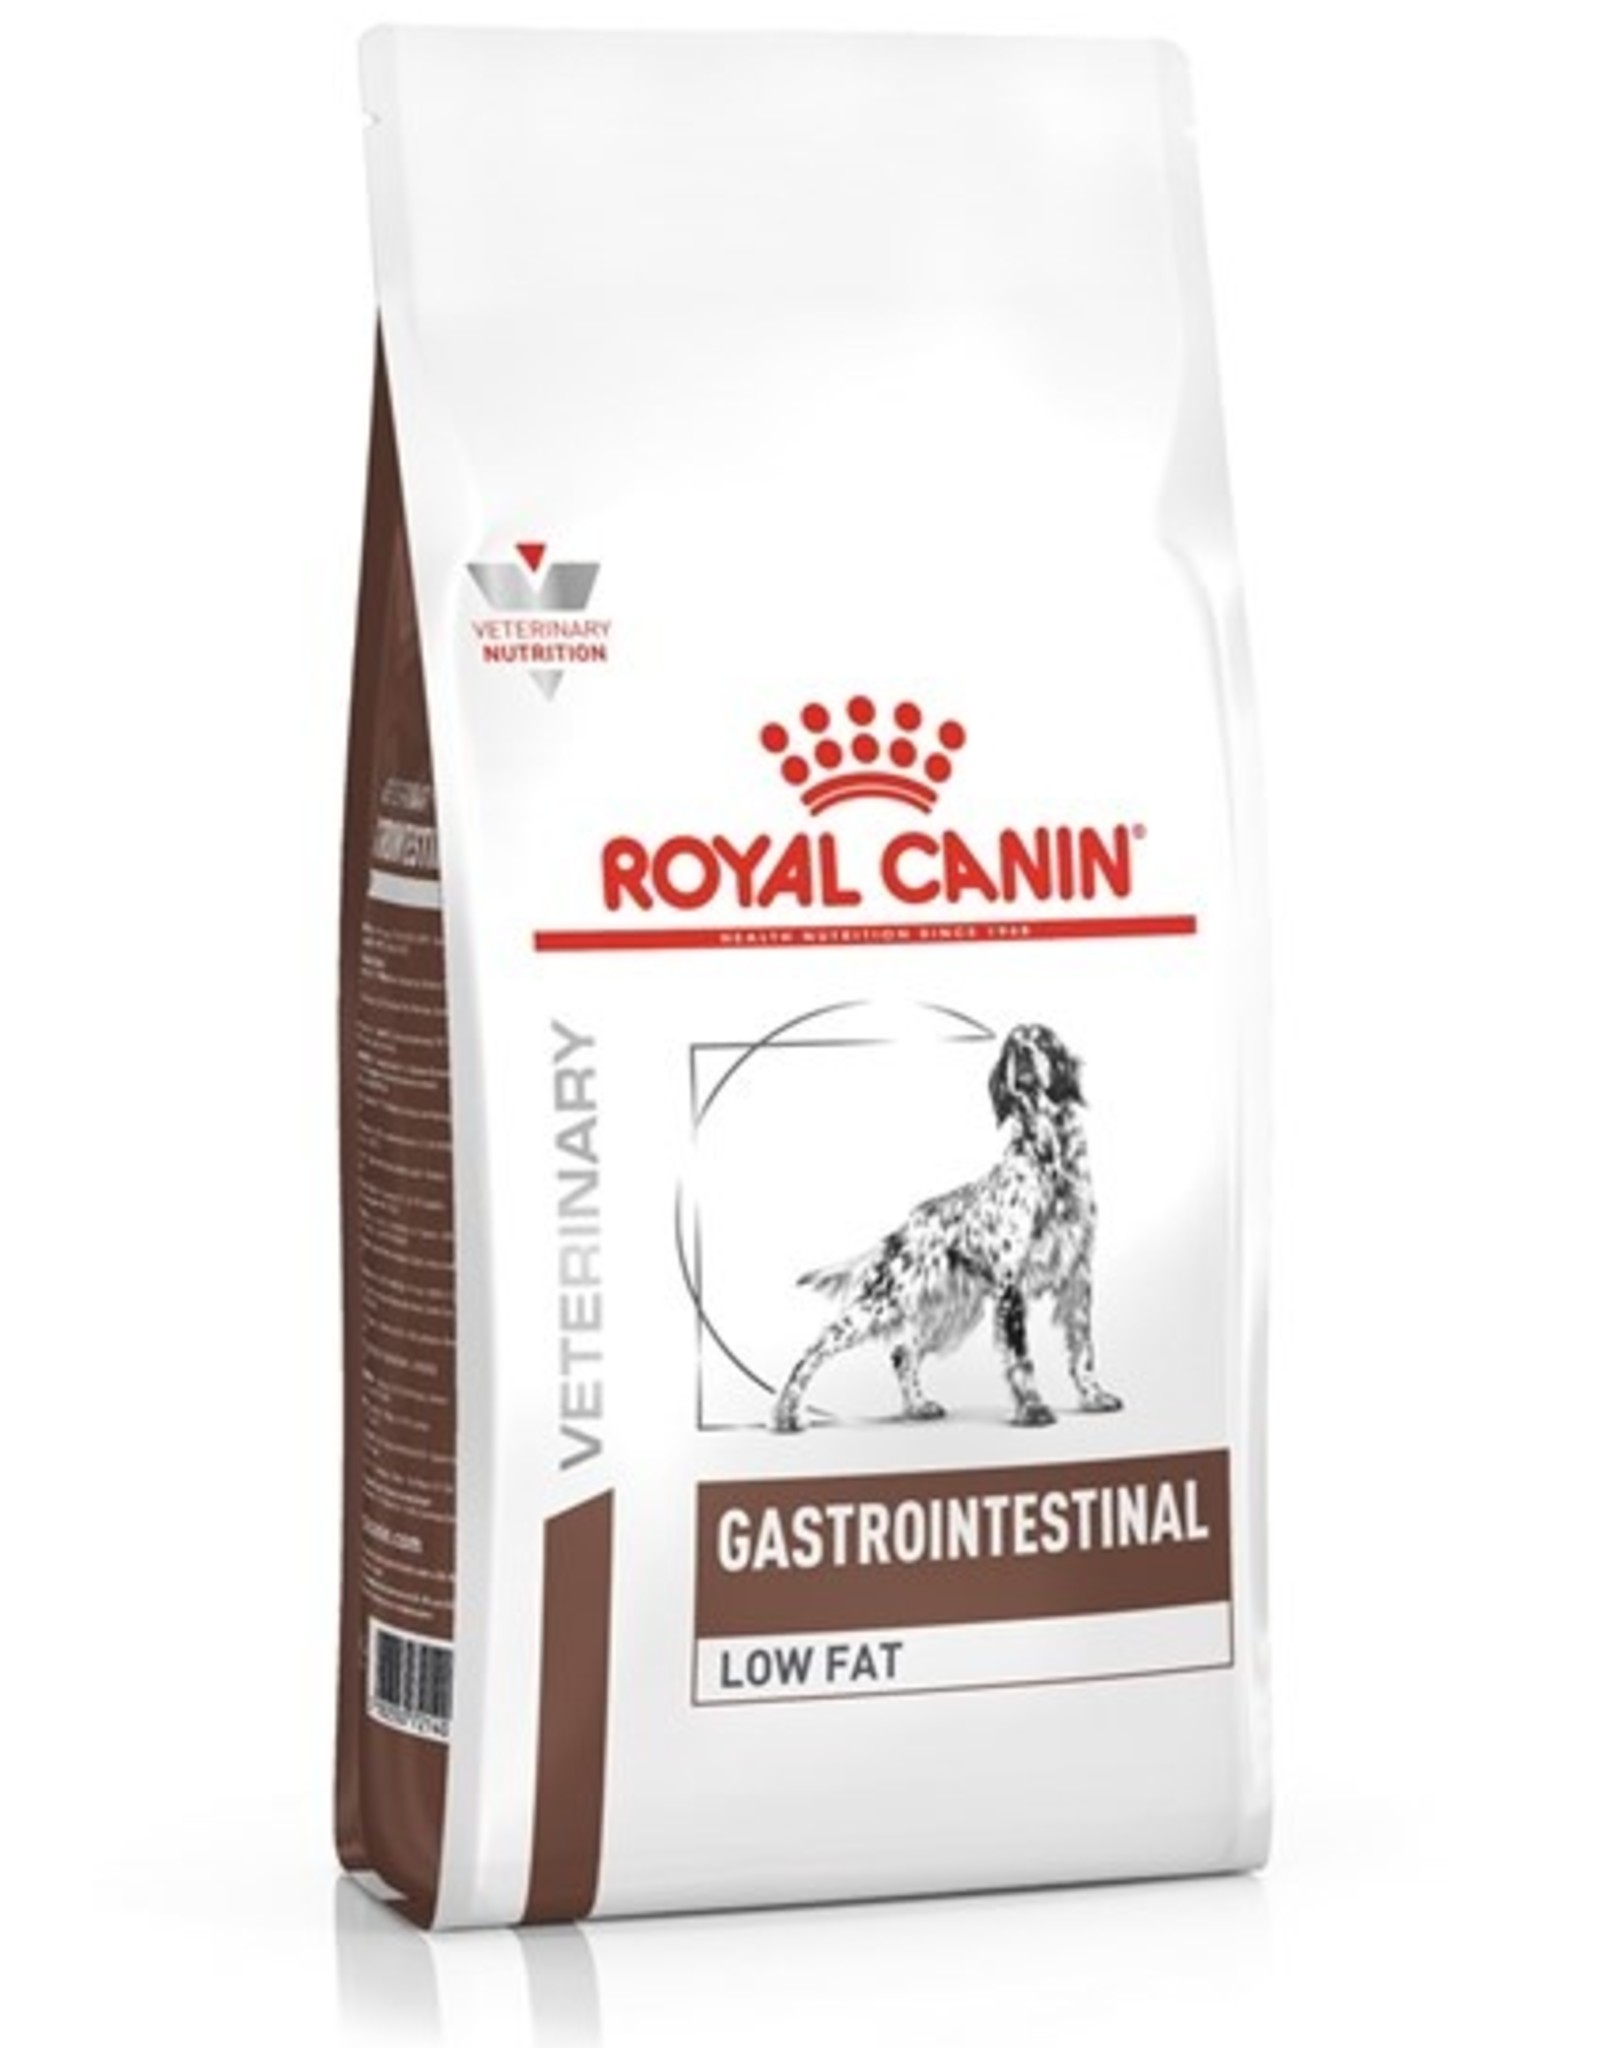 Royal Canin Royal Canin Gastro Intestinal Low Fat Hund 6kg